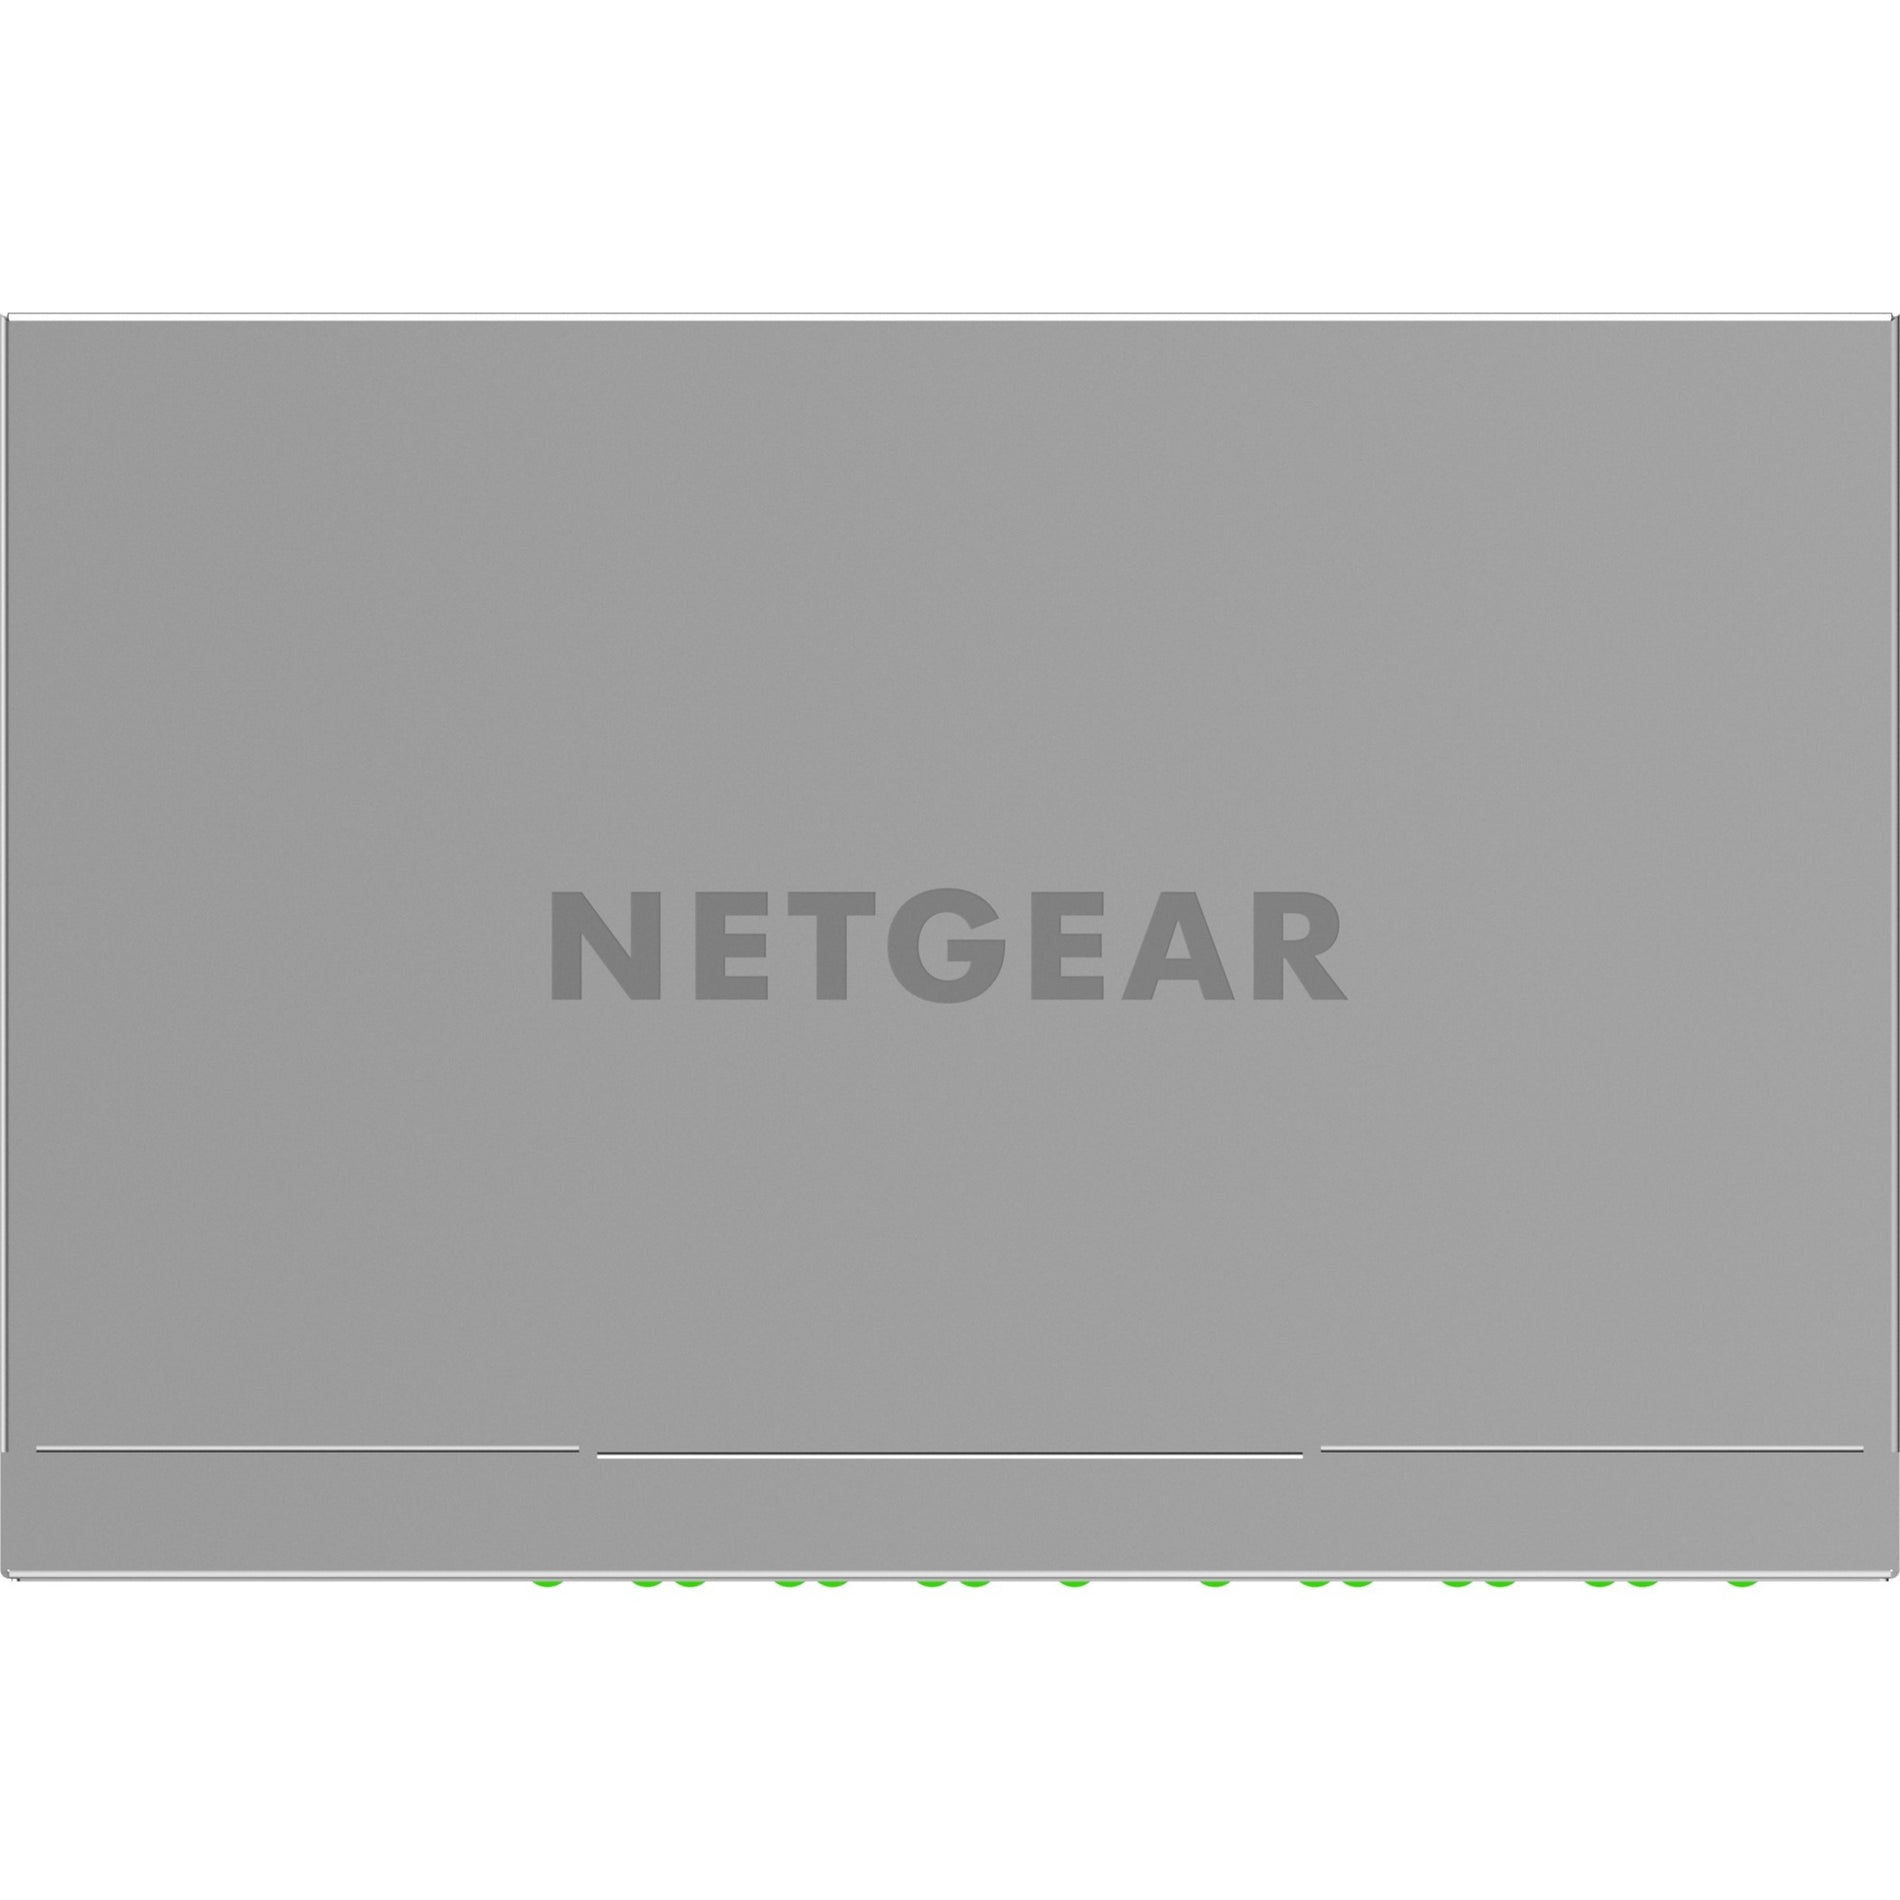 NETGEAR MS108EUP-100NAS 8-port Ultra60 PoE++ Multi-Gigabit Ethernet Plus Switch, 230W PoE Budget, WiFi 6 AP Connectivity